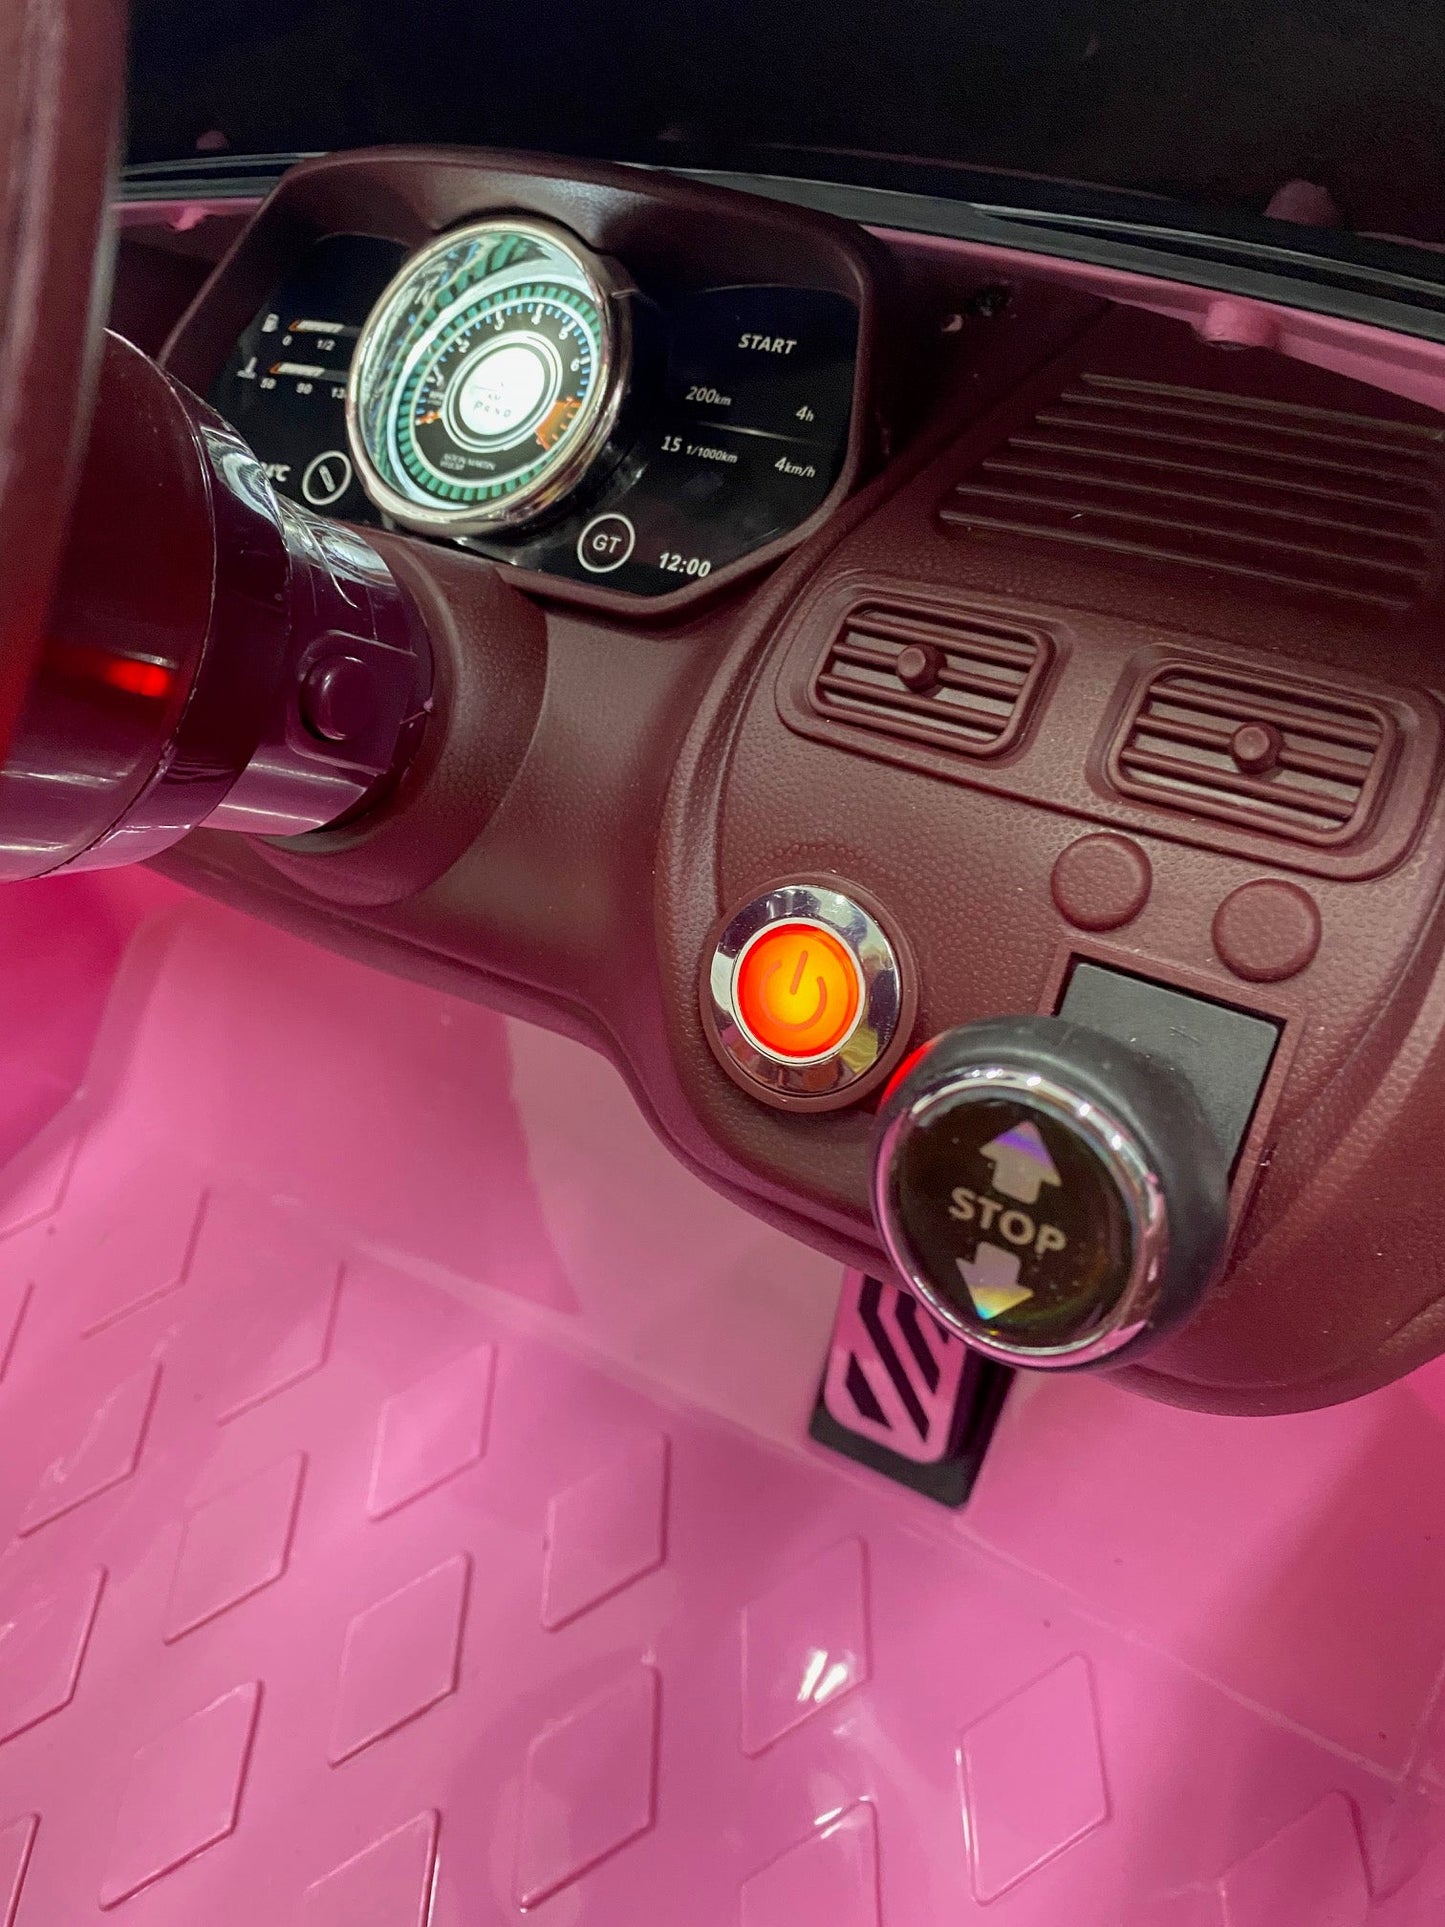 Pink Aston Martin DB11 Kids Electric Ride on Car